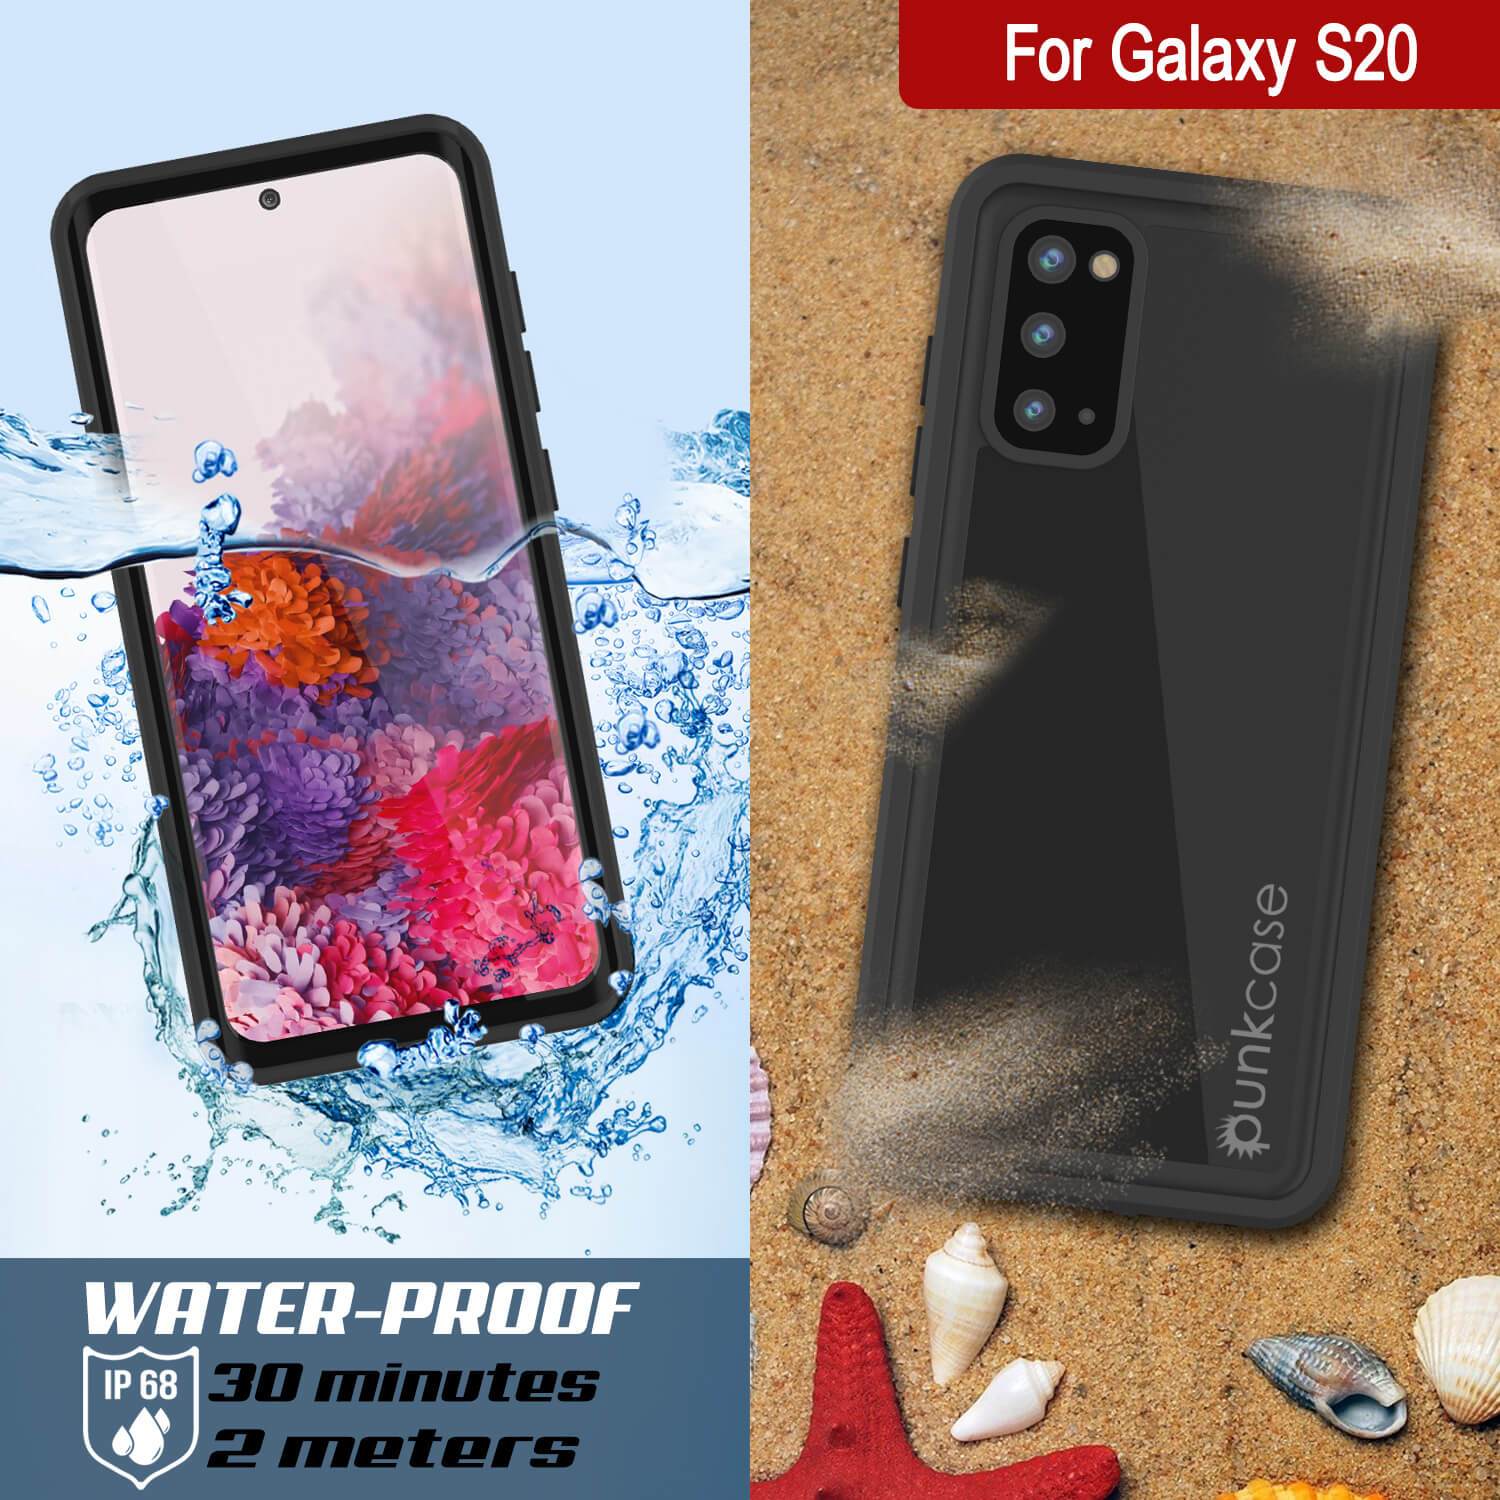 Galaxy S20 Waterproof Case PunkCase StudStar Red Thin 6.6ft Underwater IP68 Shock/Snow Proof